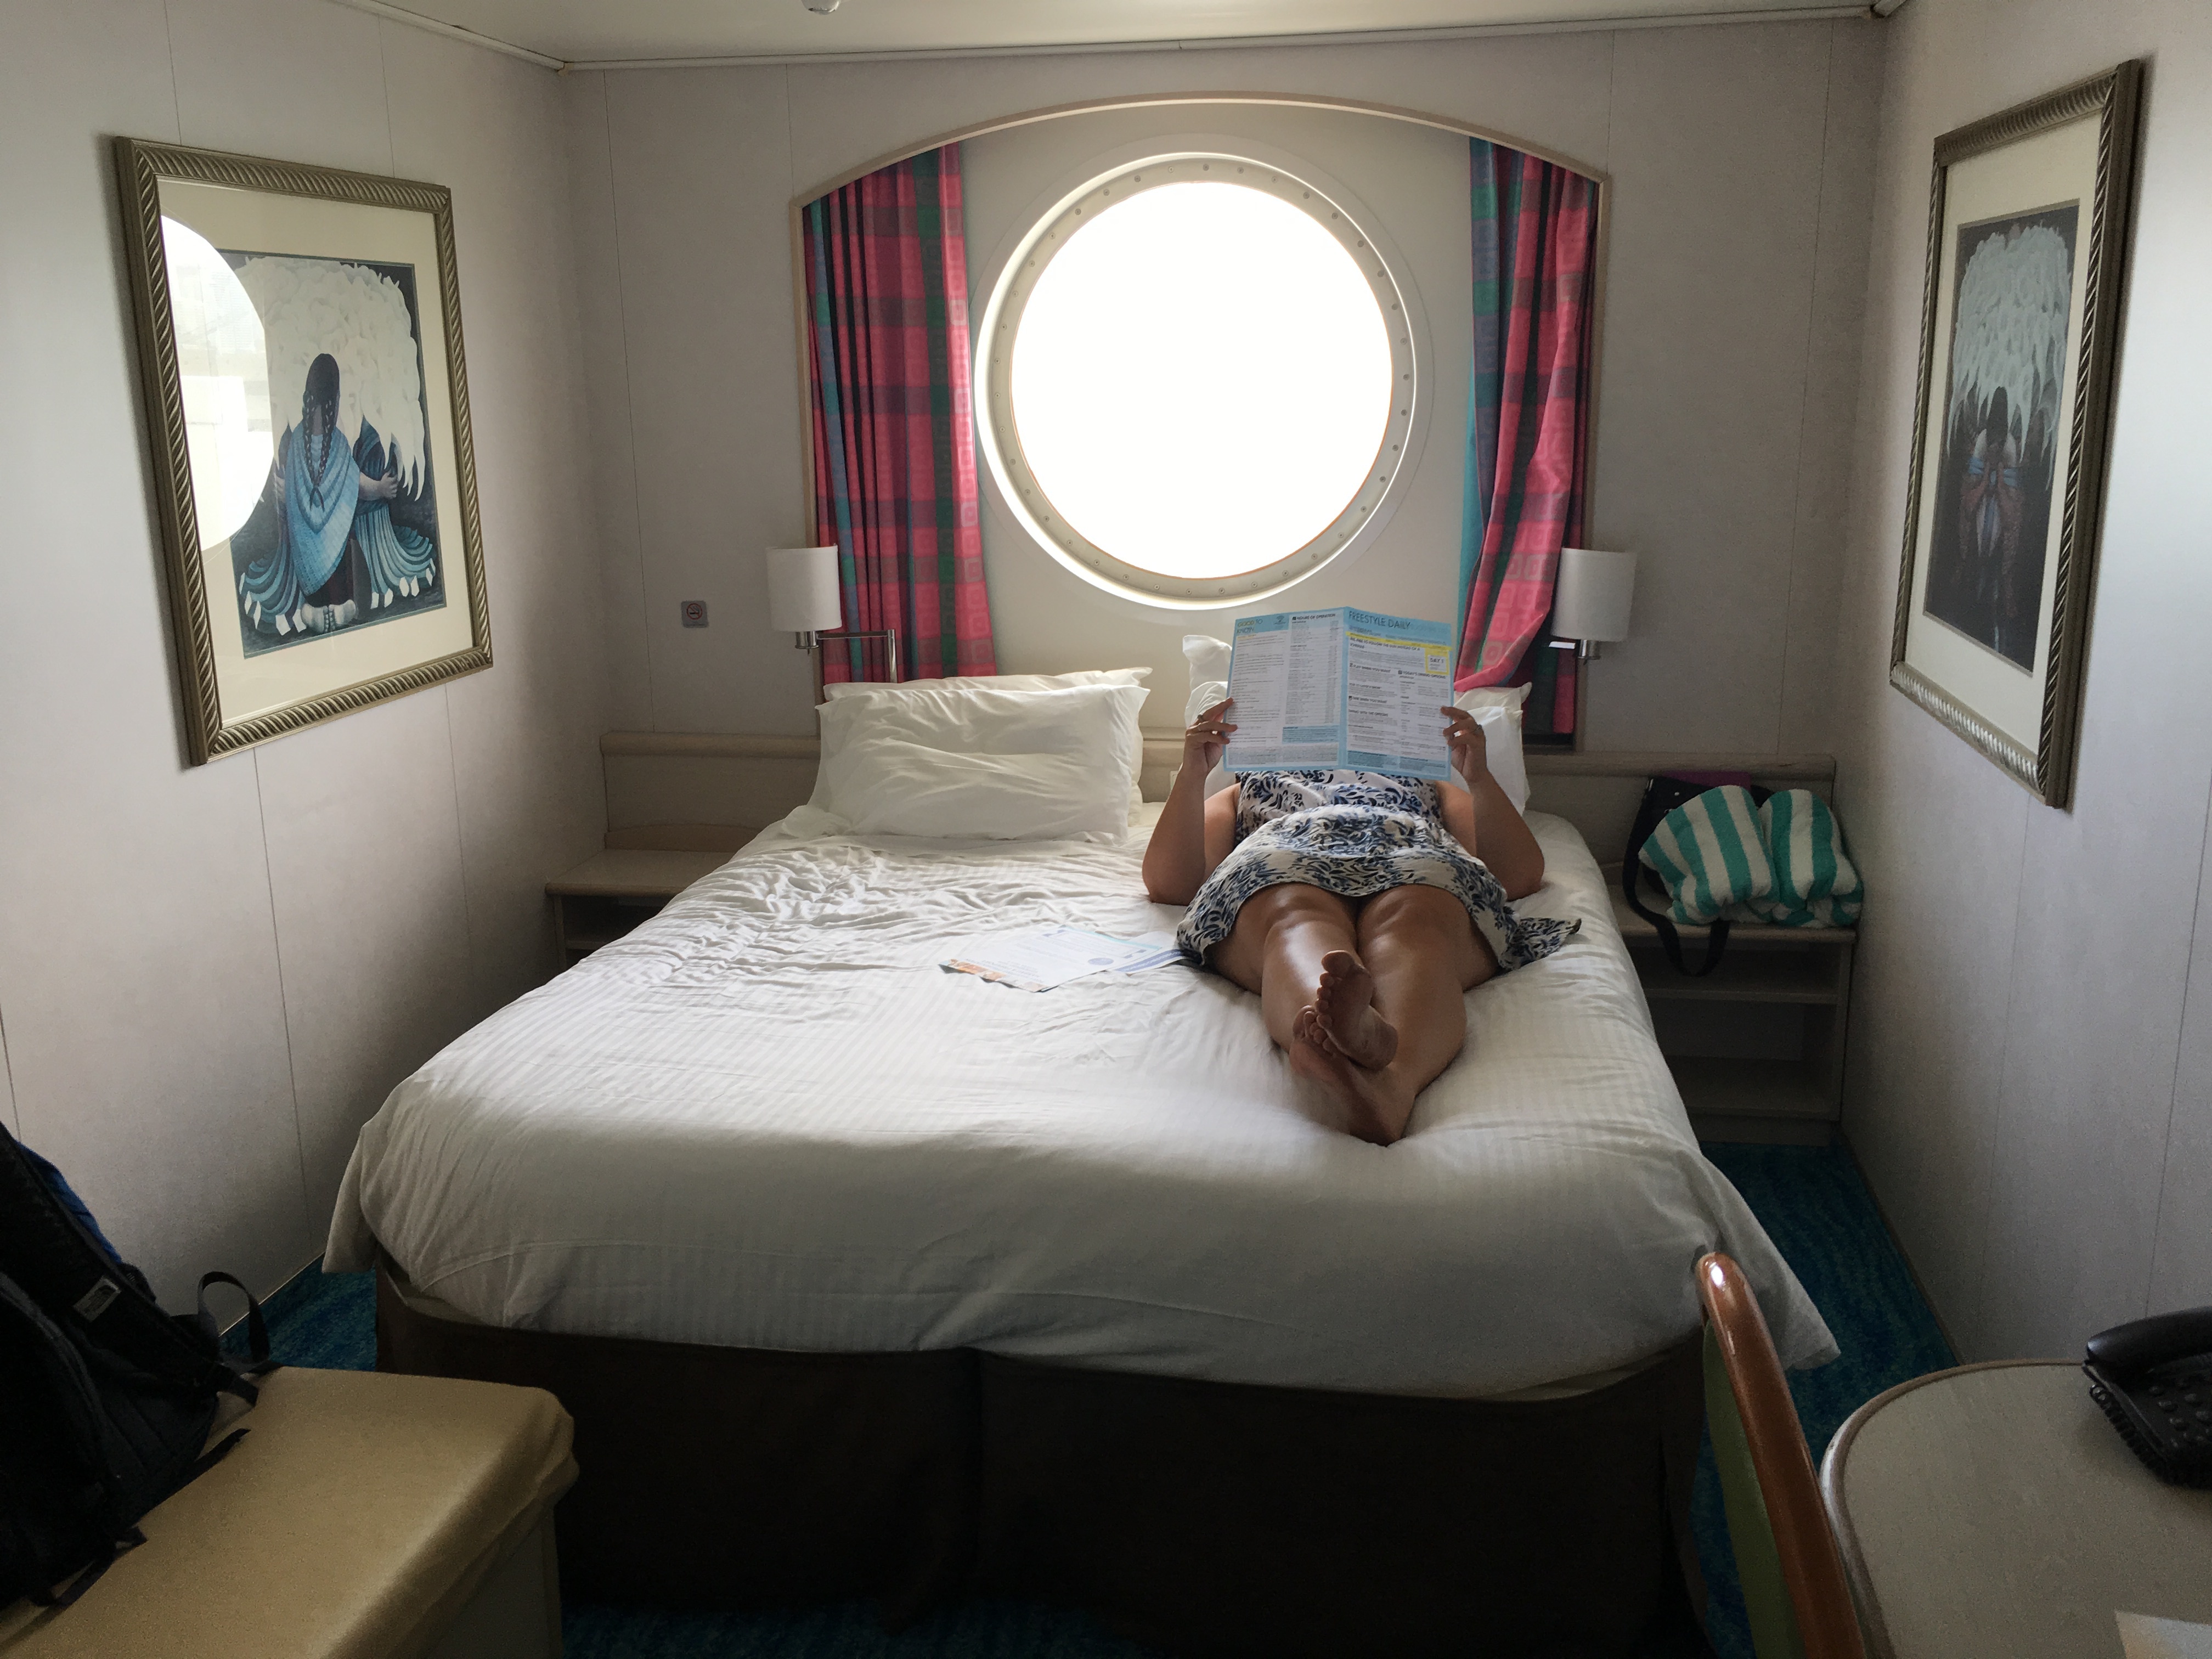 norwegian sky cruise ship rooms